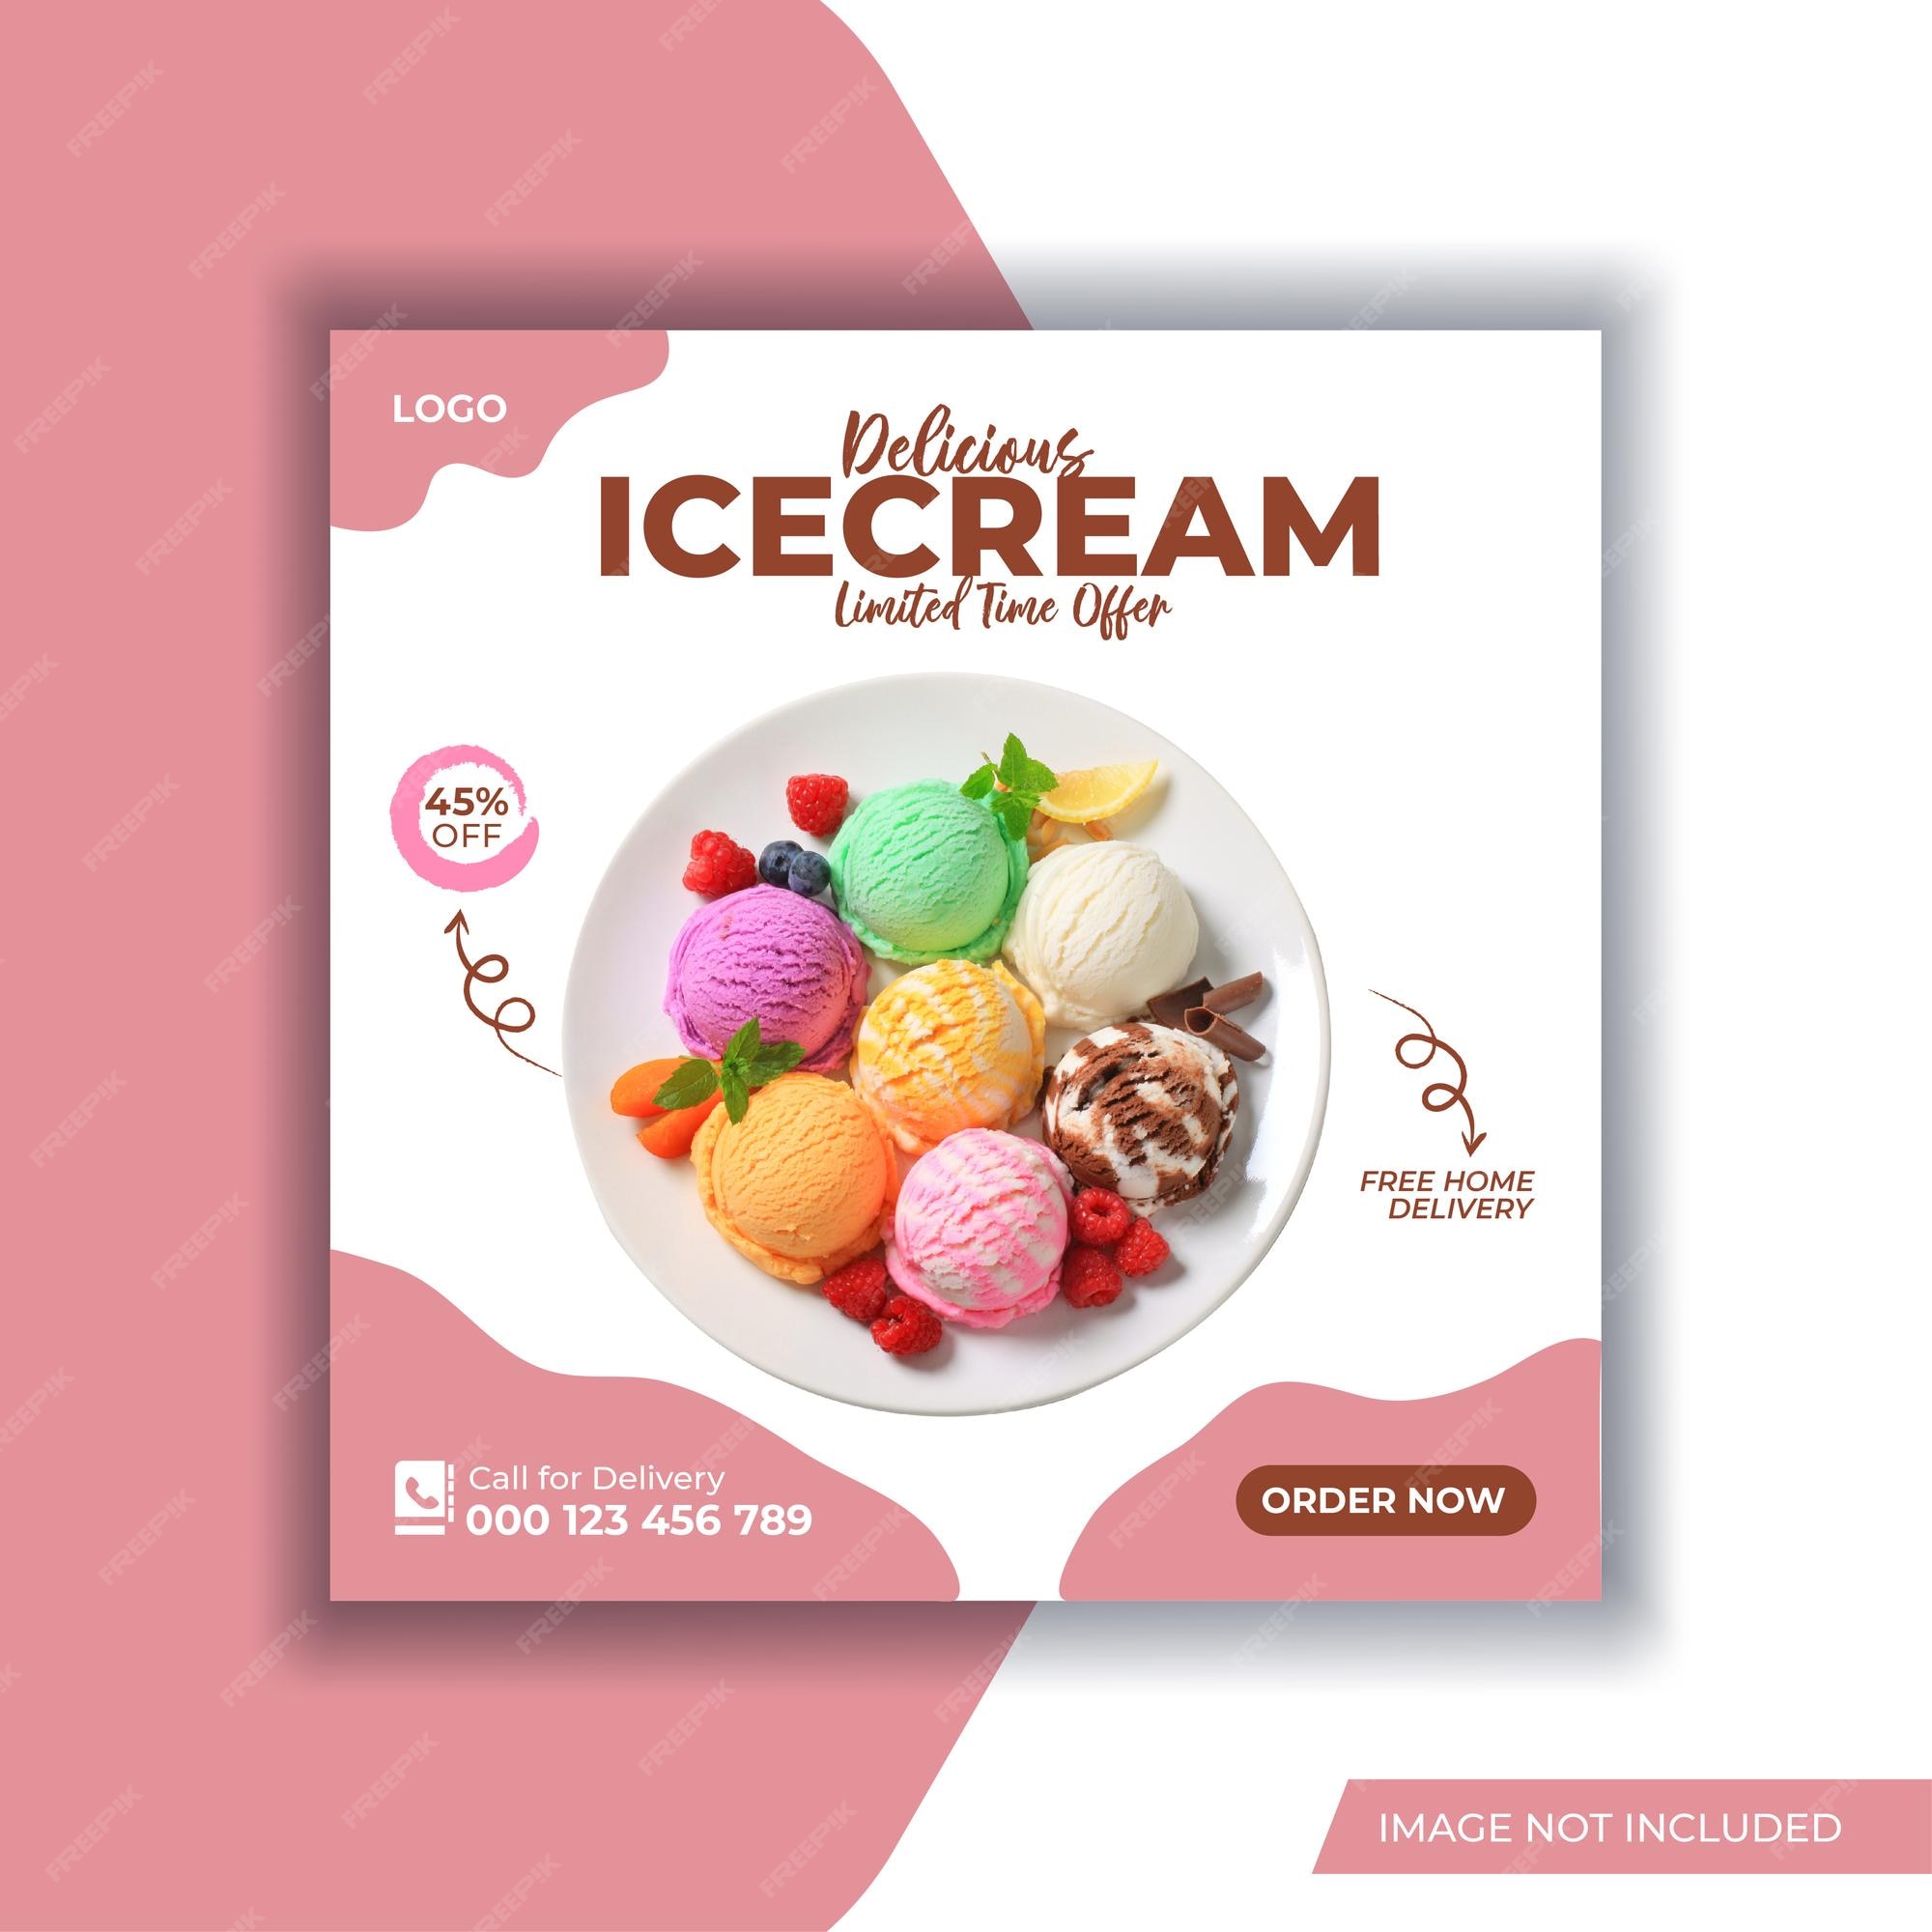 Ice Cream Social Media Post PSD Templates